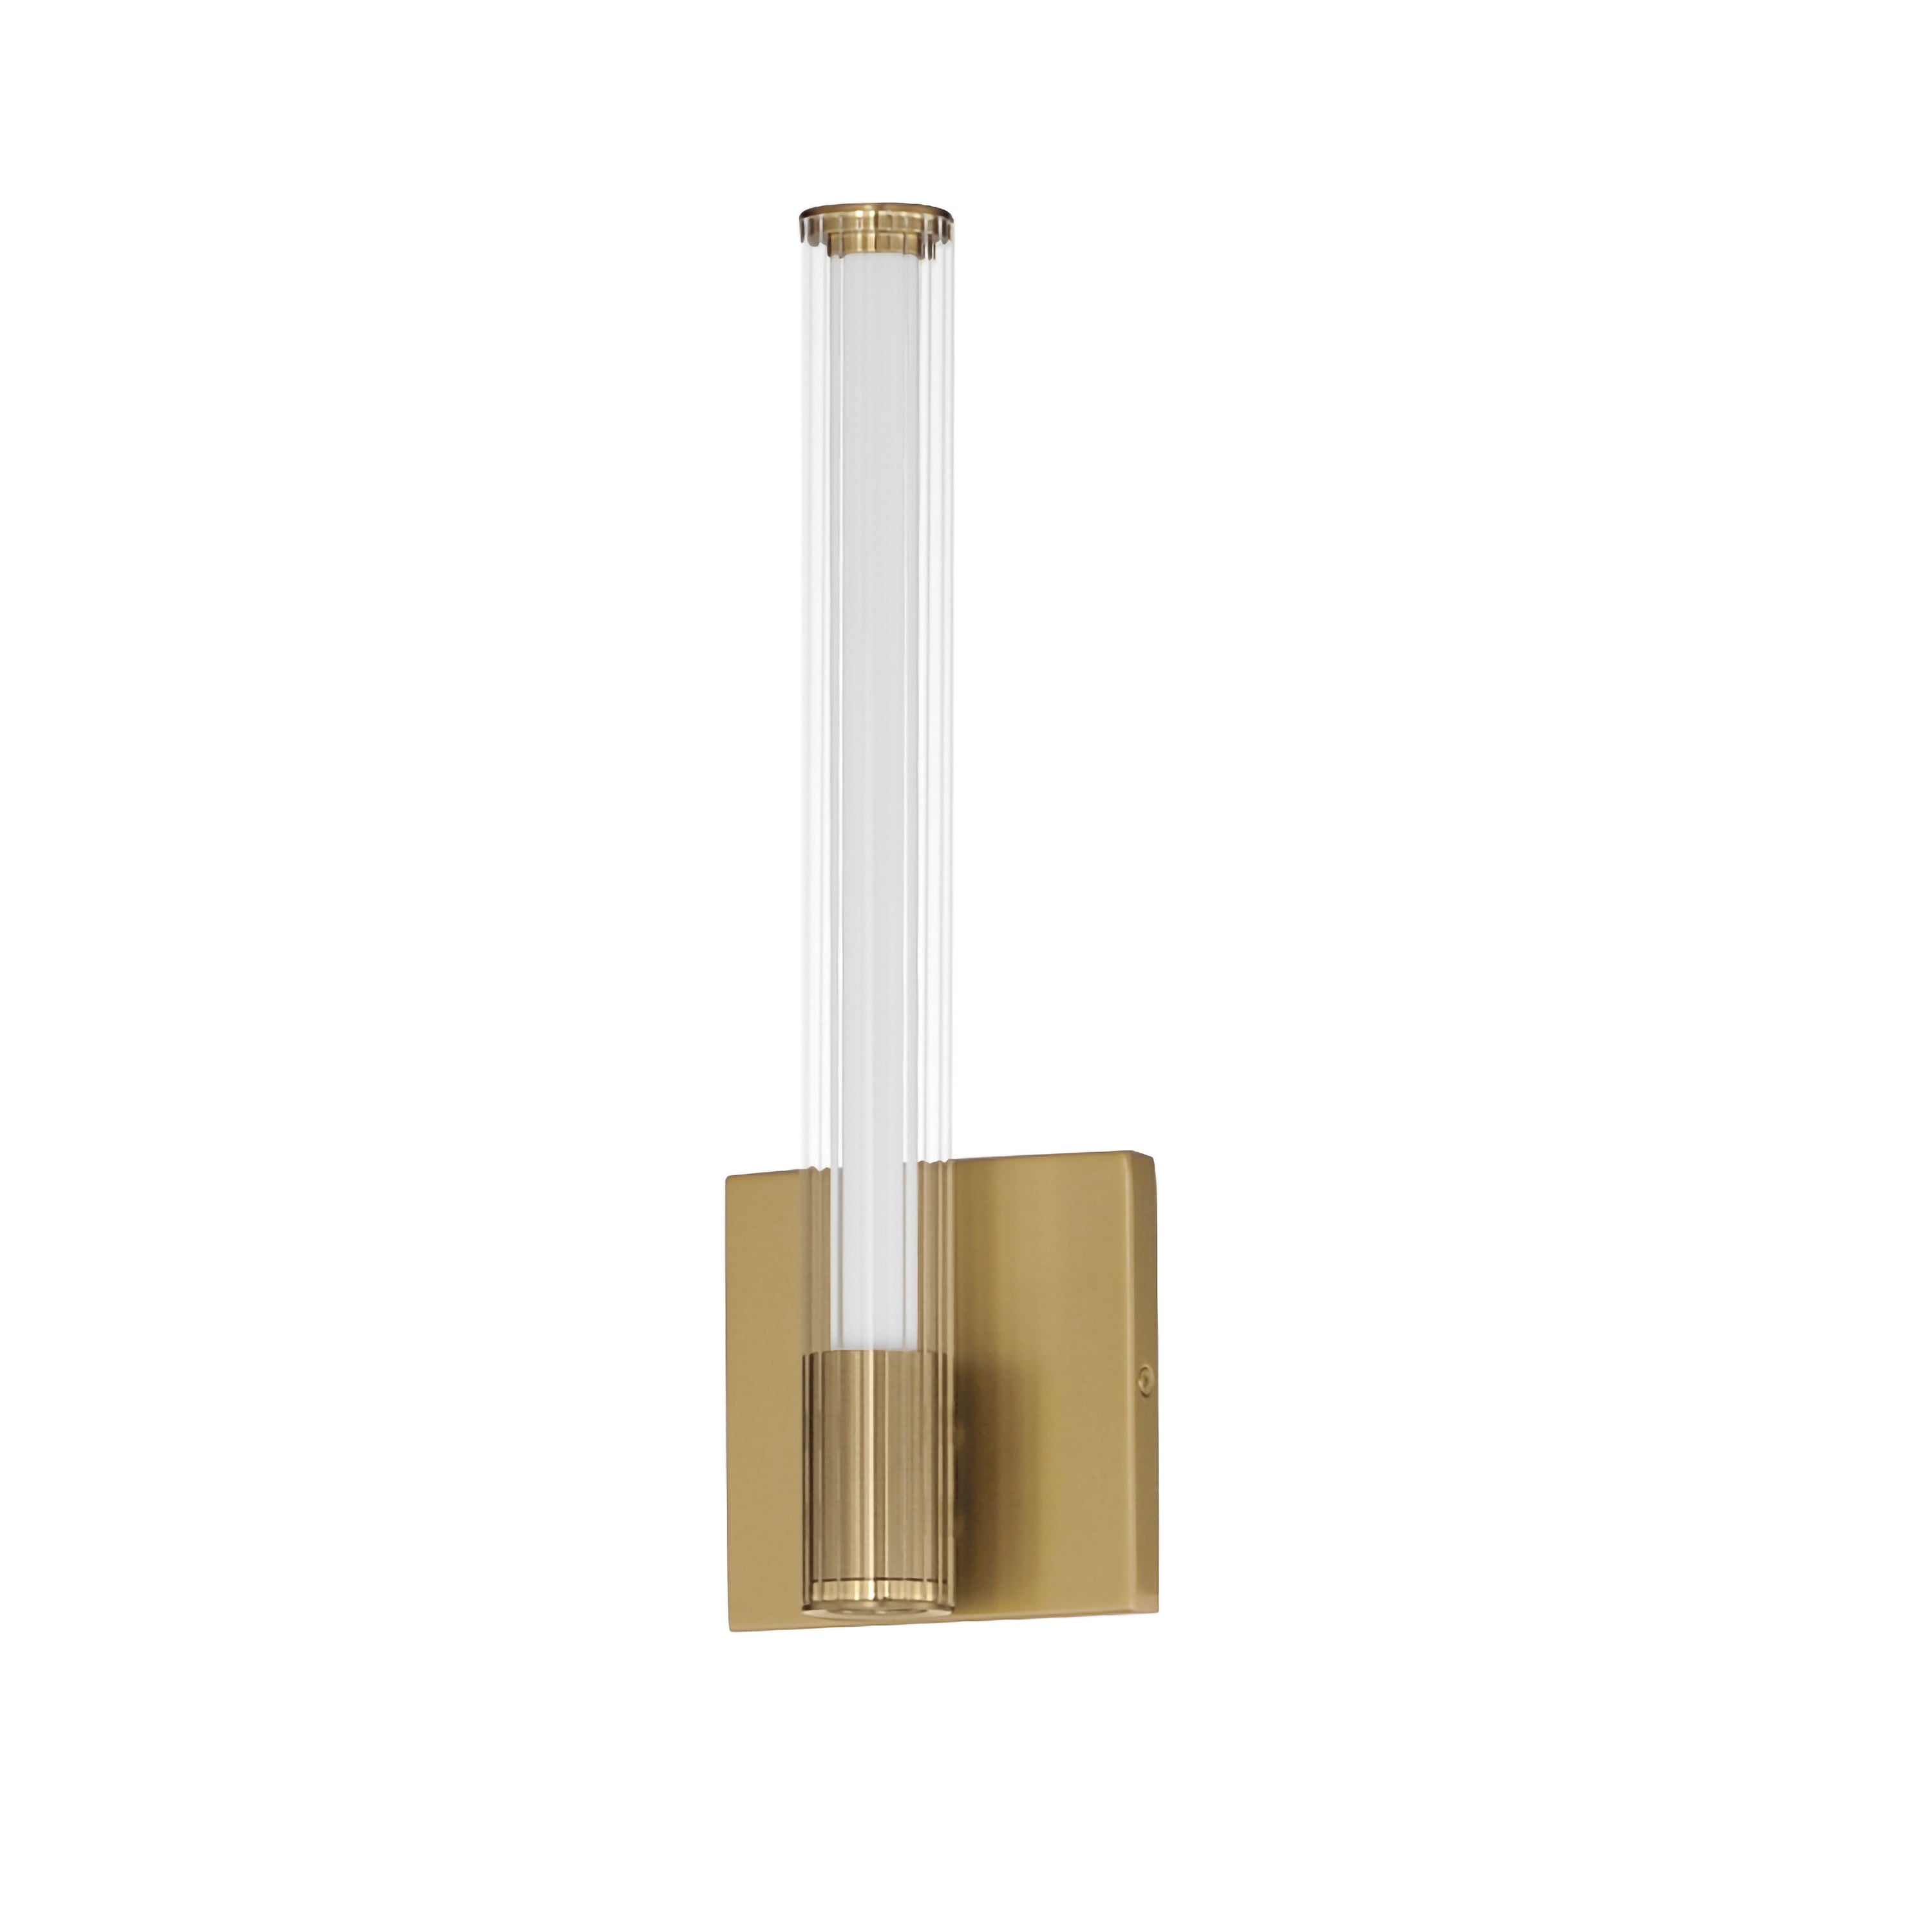 Cortex-Wall Sconce Wall Light Fixtures ET2 0x4.75x14.5 Natural Aged Brass 